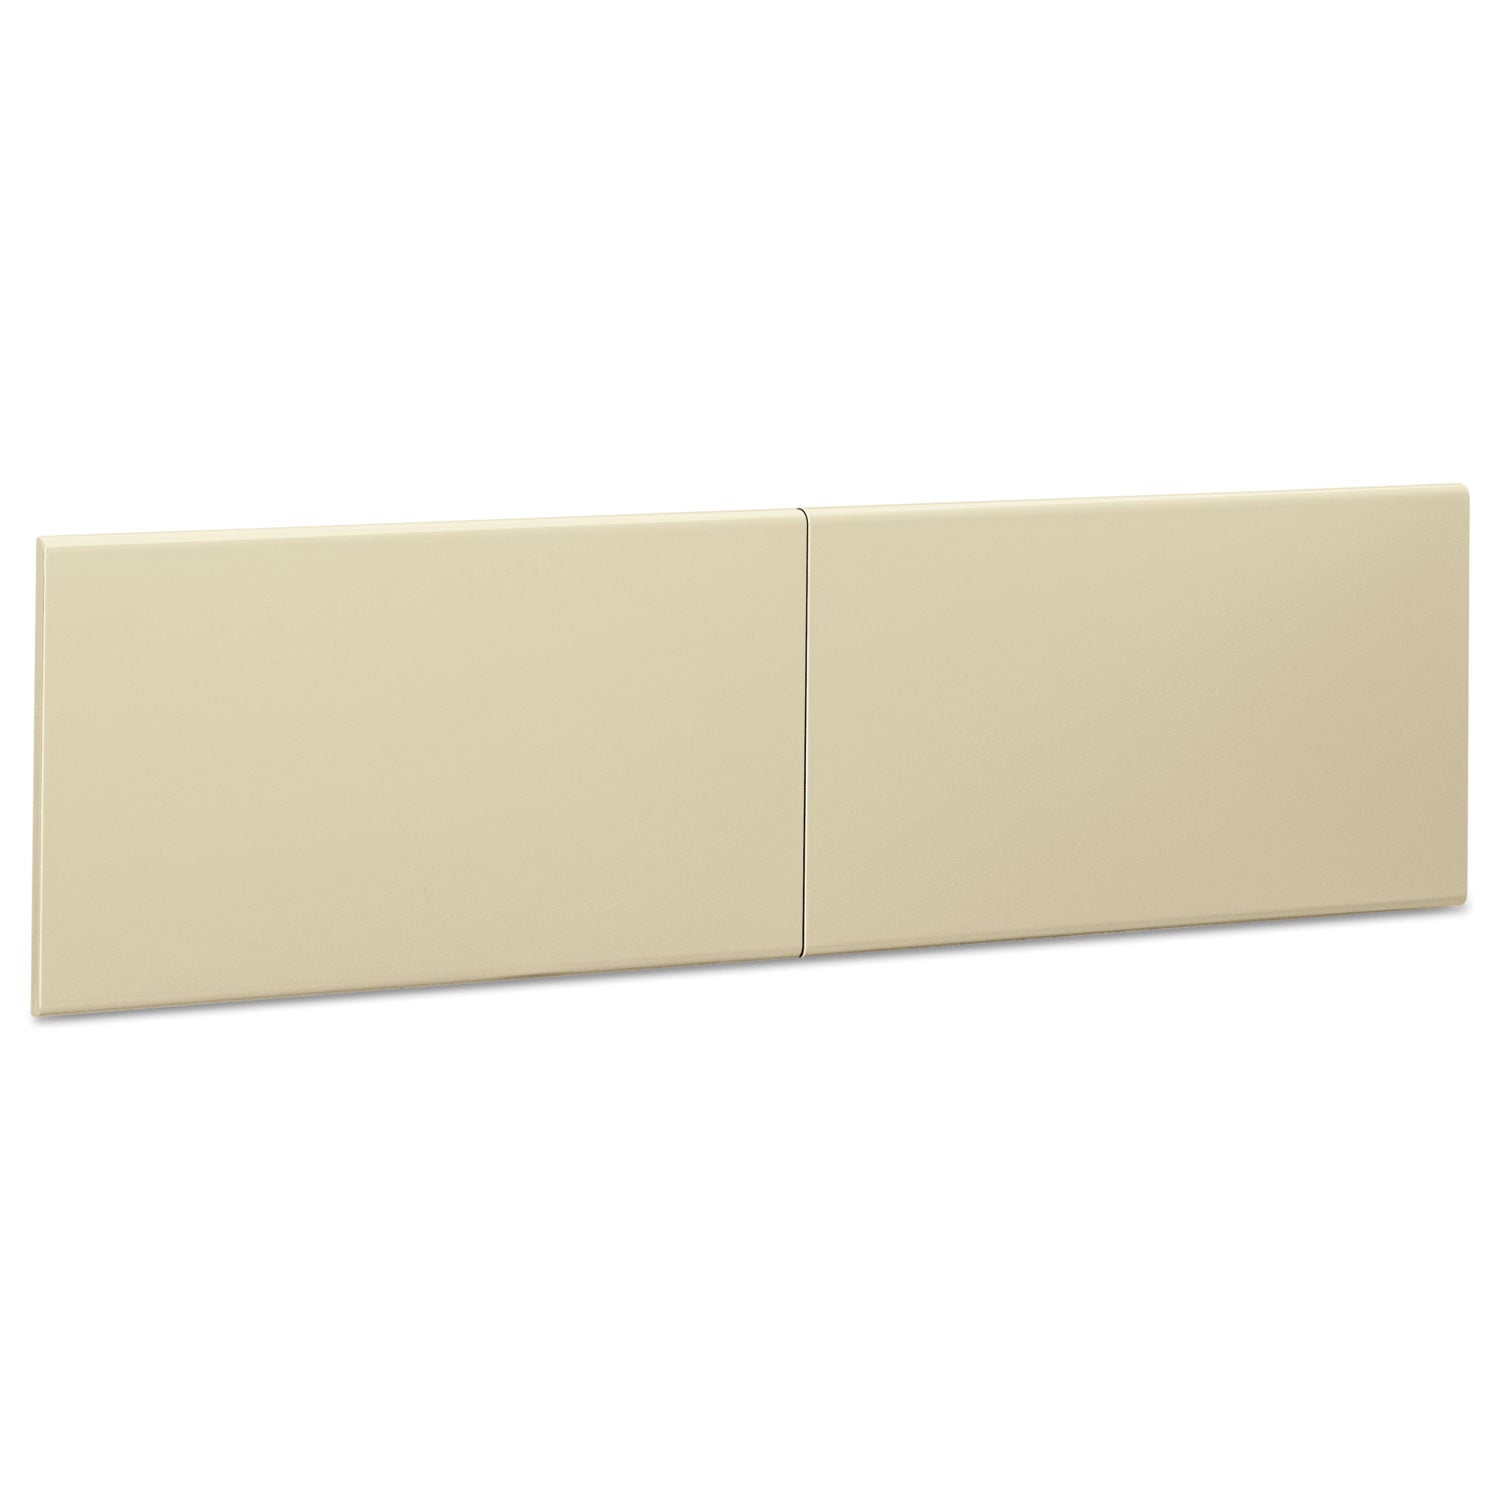 38000 Series Hutch Flipper Doors For 60"w Open Shelf, 30w x 15h, Putty - 